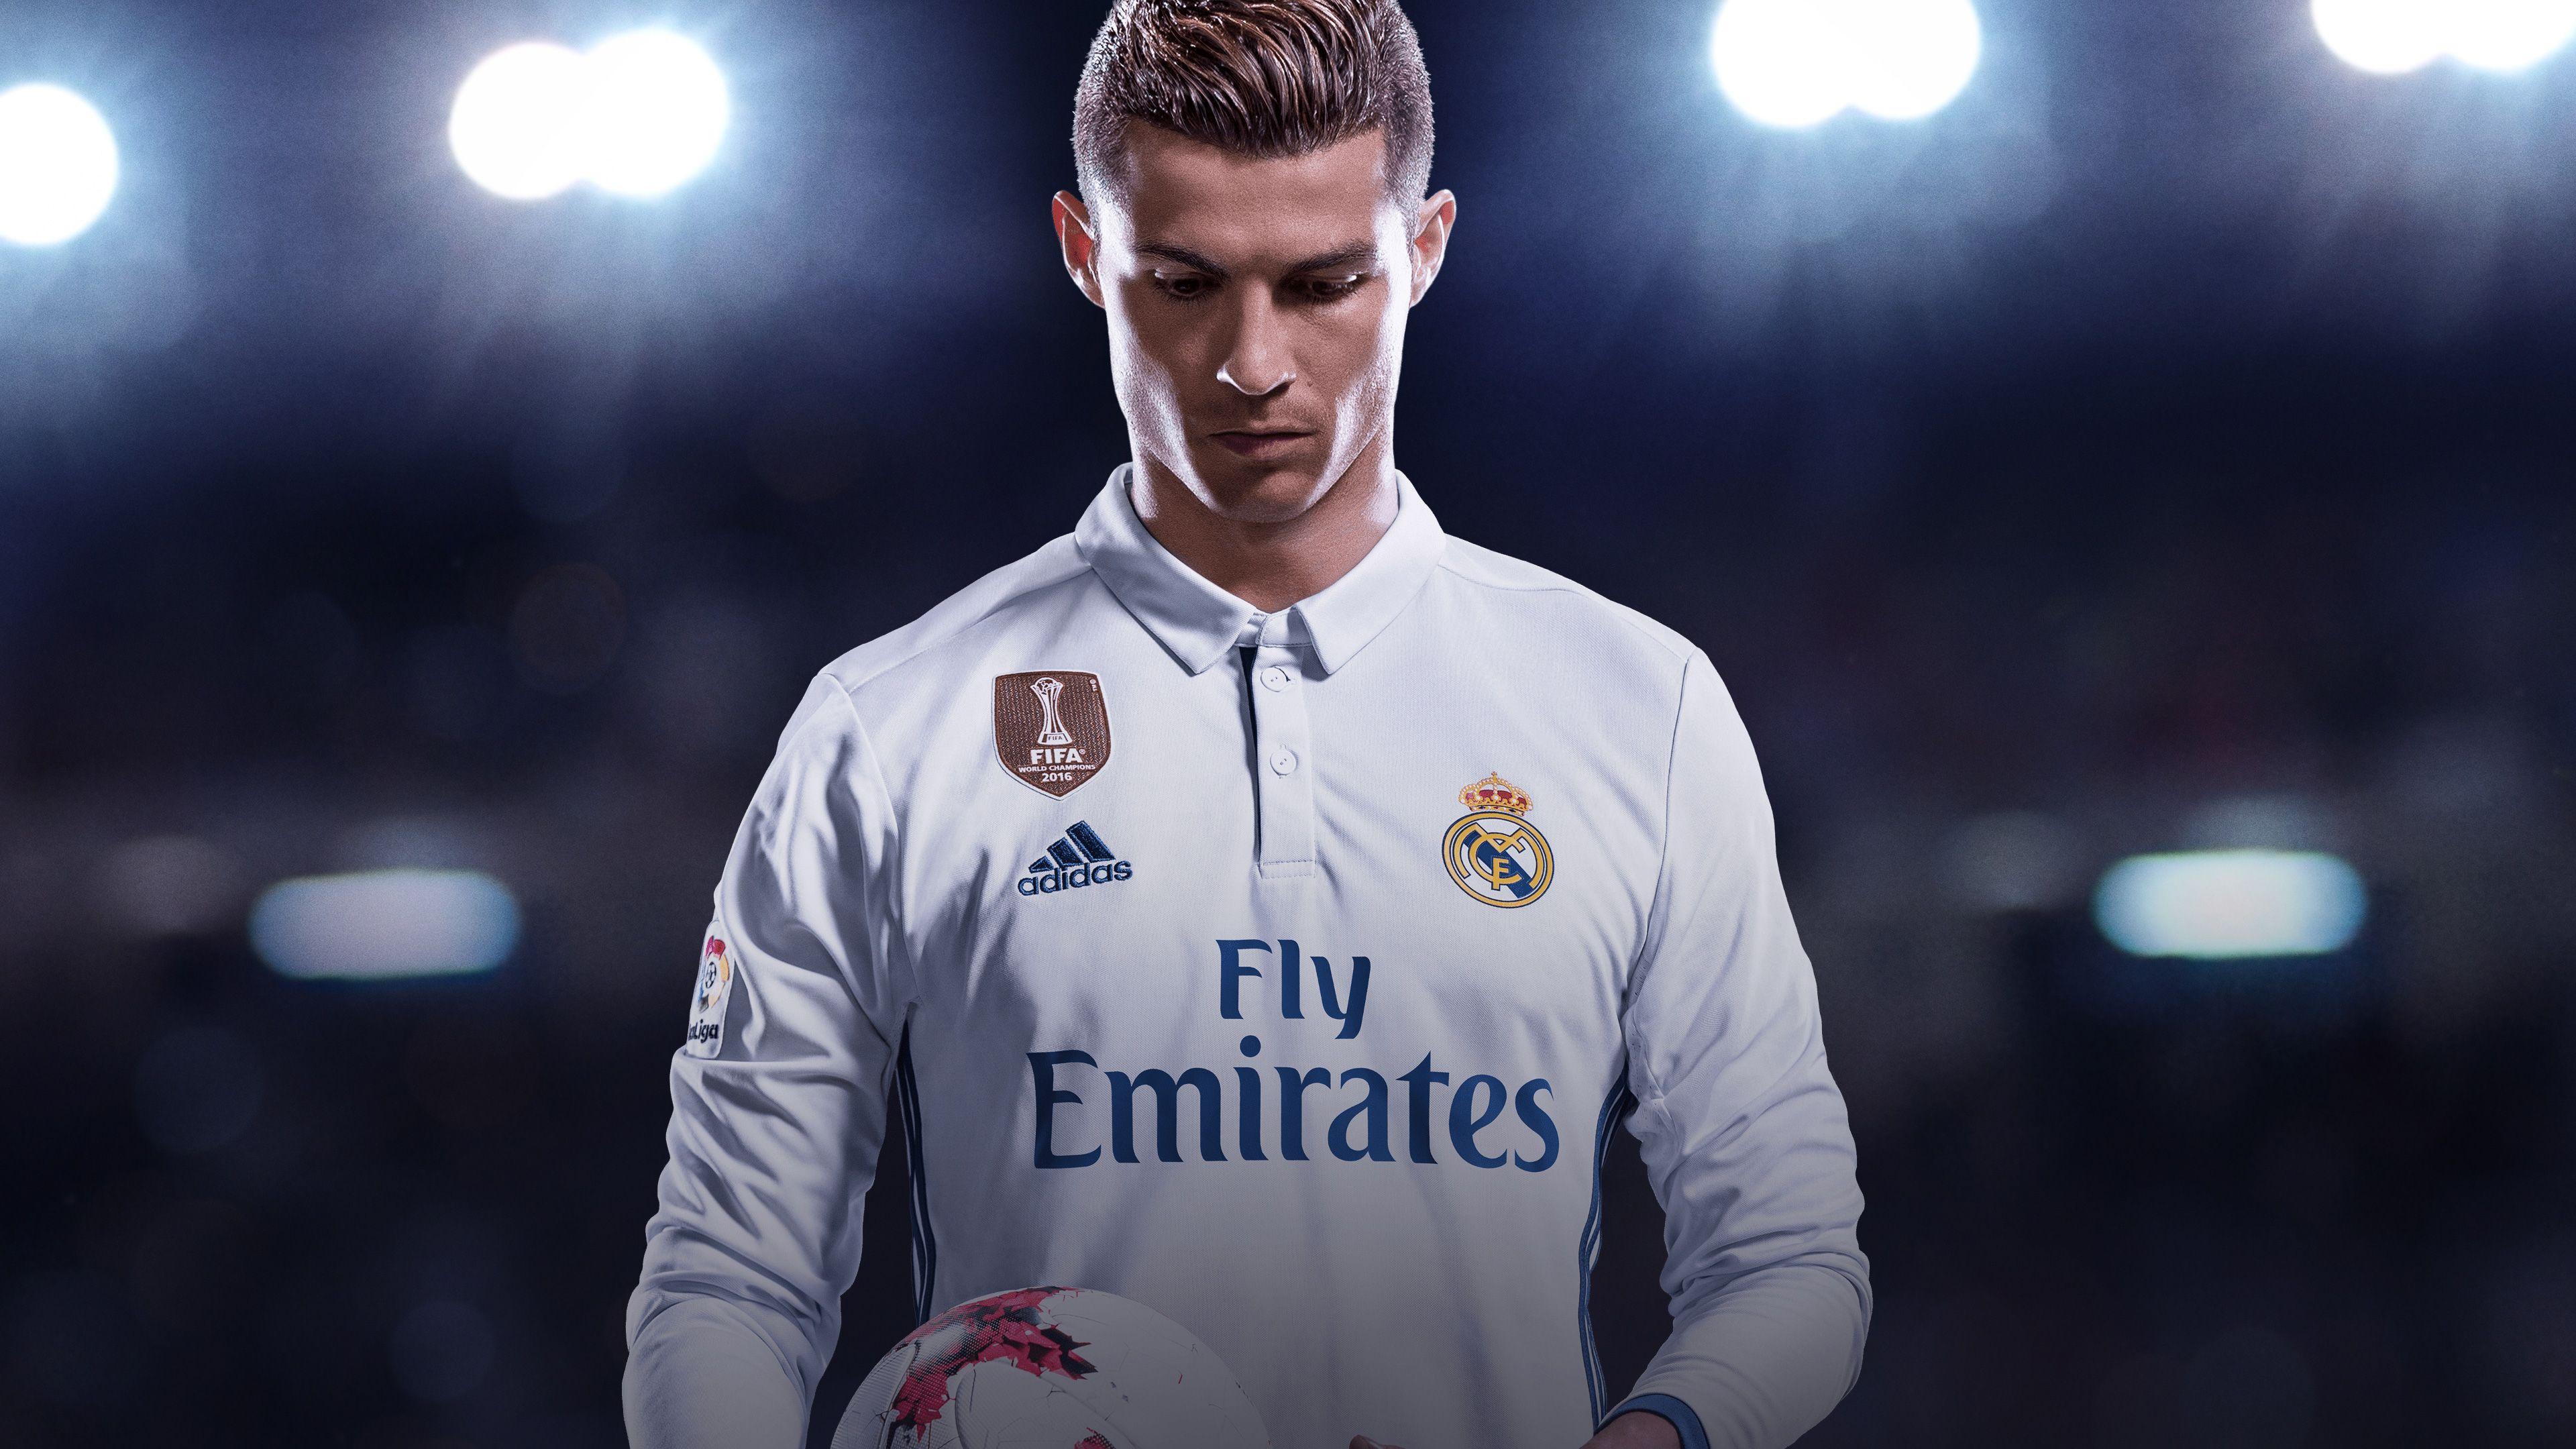 Download 2017 Fifa 18 Cristiano Ronaldo HD 4k Wallpapers In